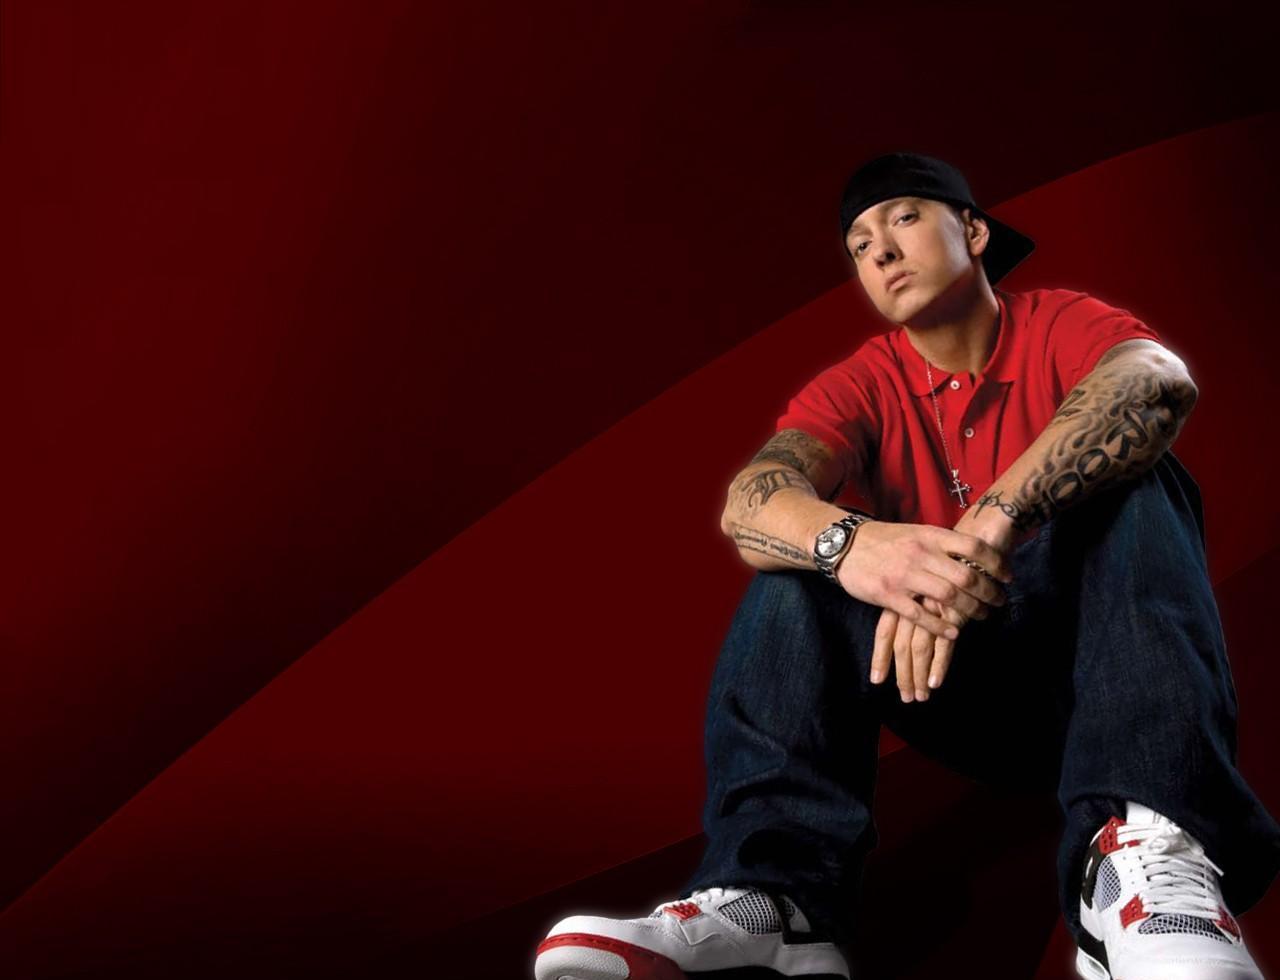 Eminem Not Afraid Wallpaper